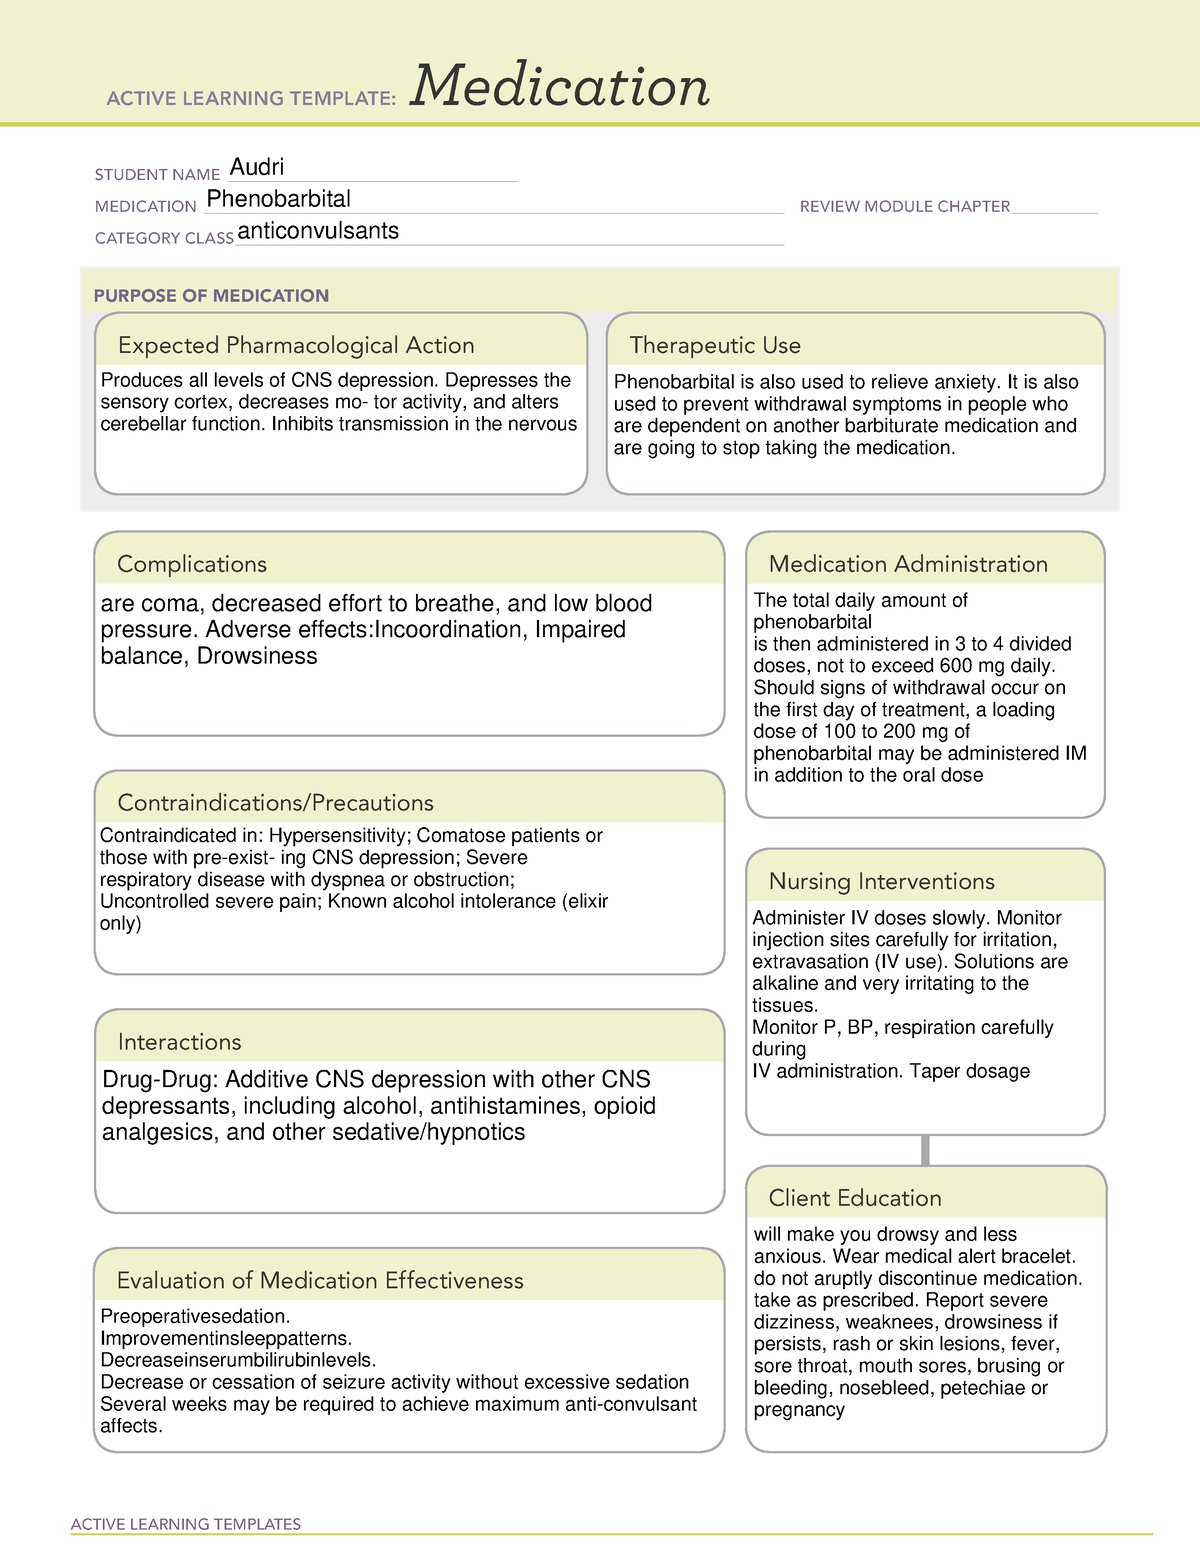 glucagon-ati-medication-template